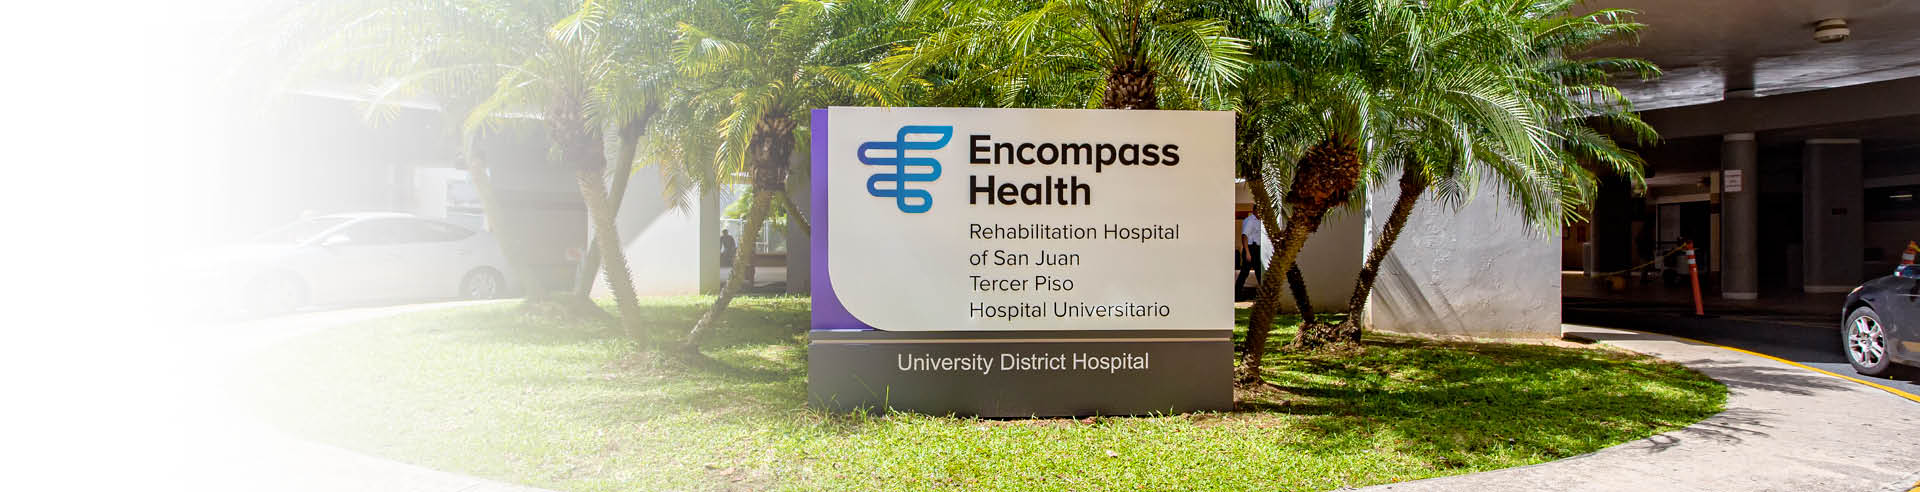 Encompass Health Rehabilitation Hospital of San Juan exterior image of hospital with sign